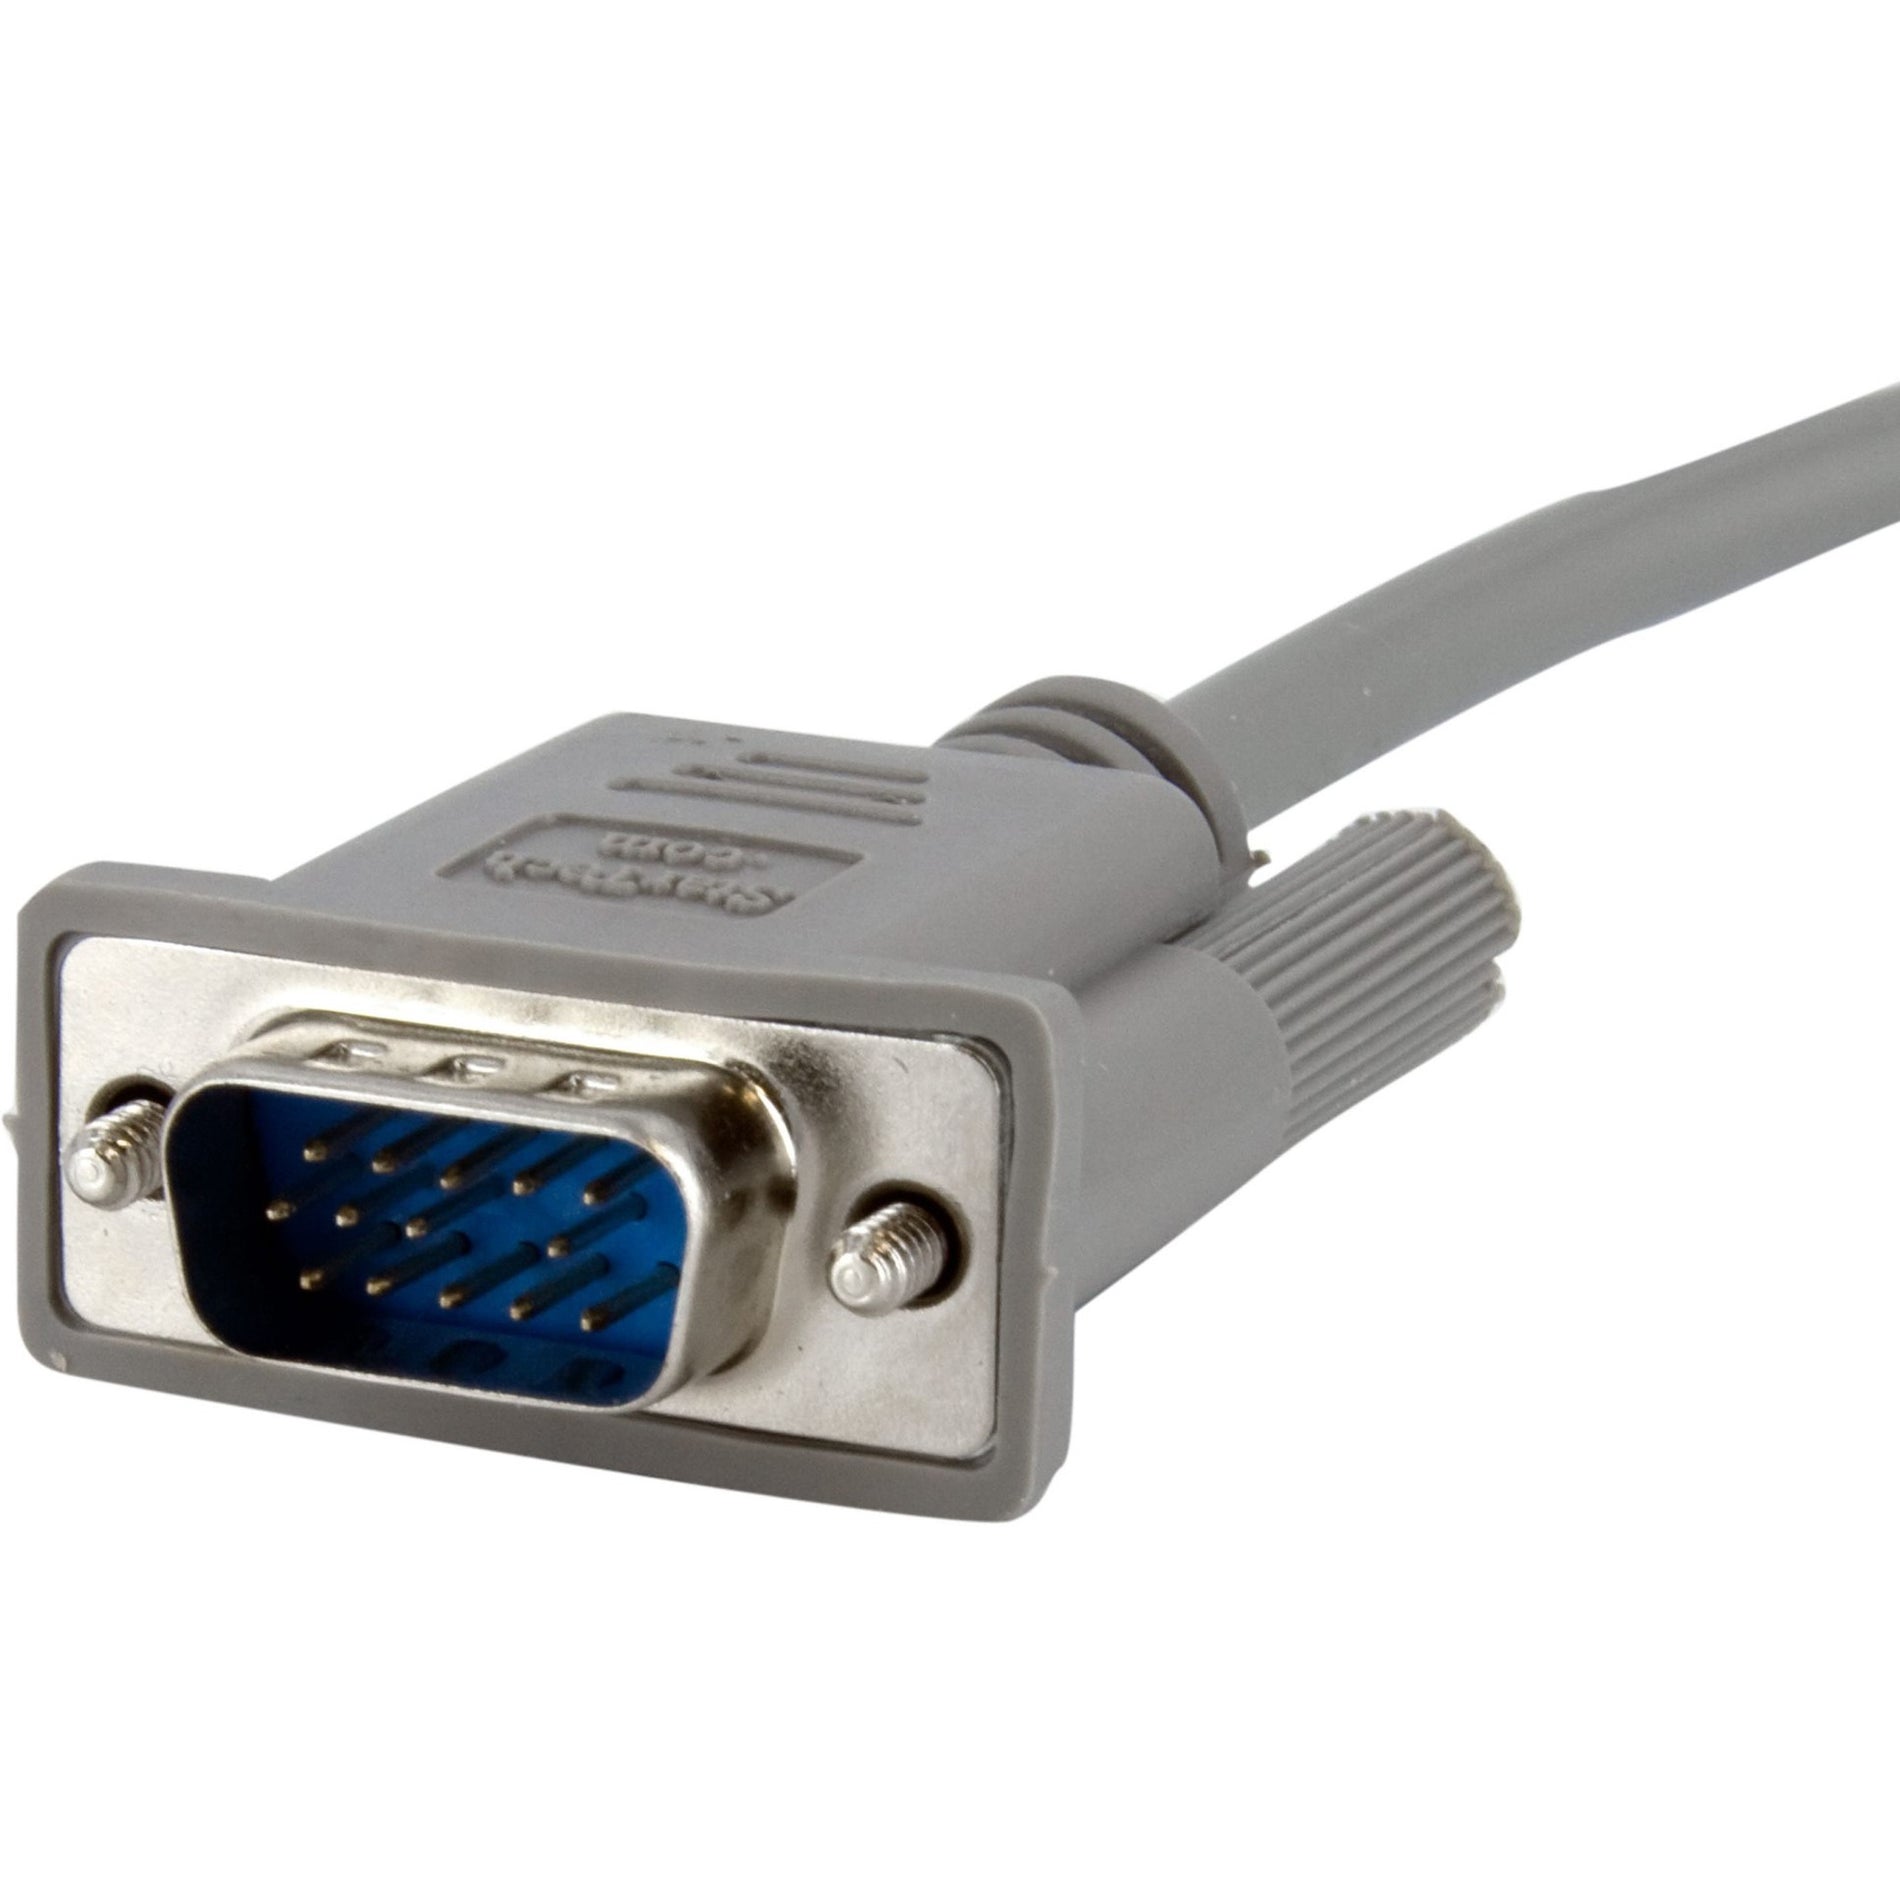 StarTech.com MXT101MM10 VGA Video Monitor Cable - 10 ft, HD-15 Male to HD-15 Male, Copper Conductor, Gray